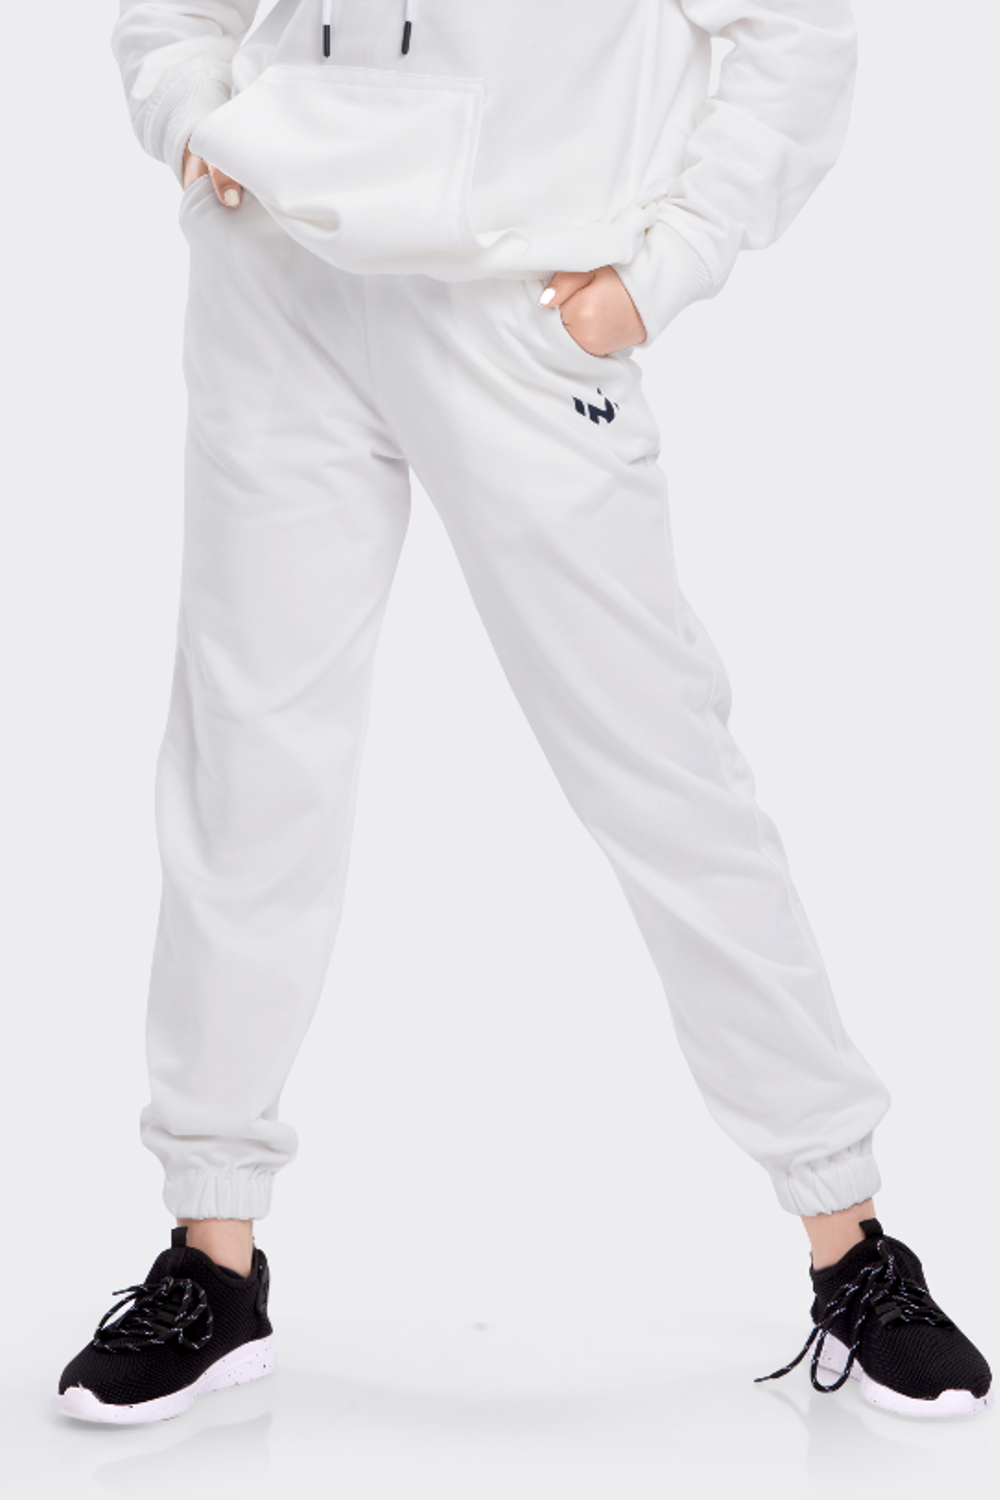 Cricket Trouser  White Cricket Sports Track Pants For Men